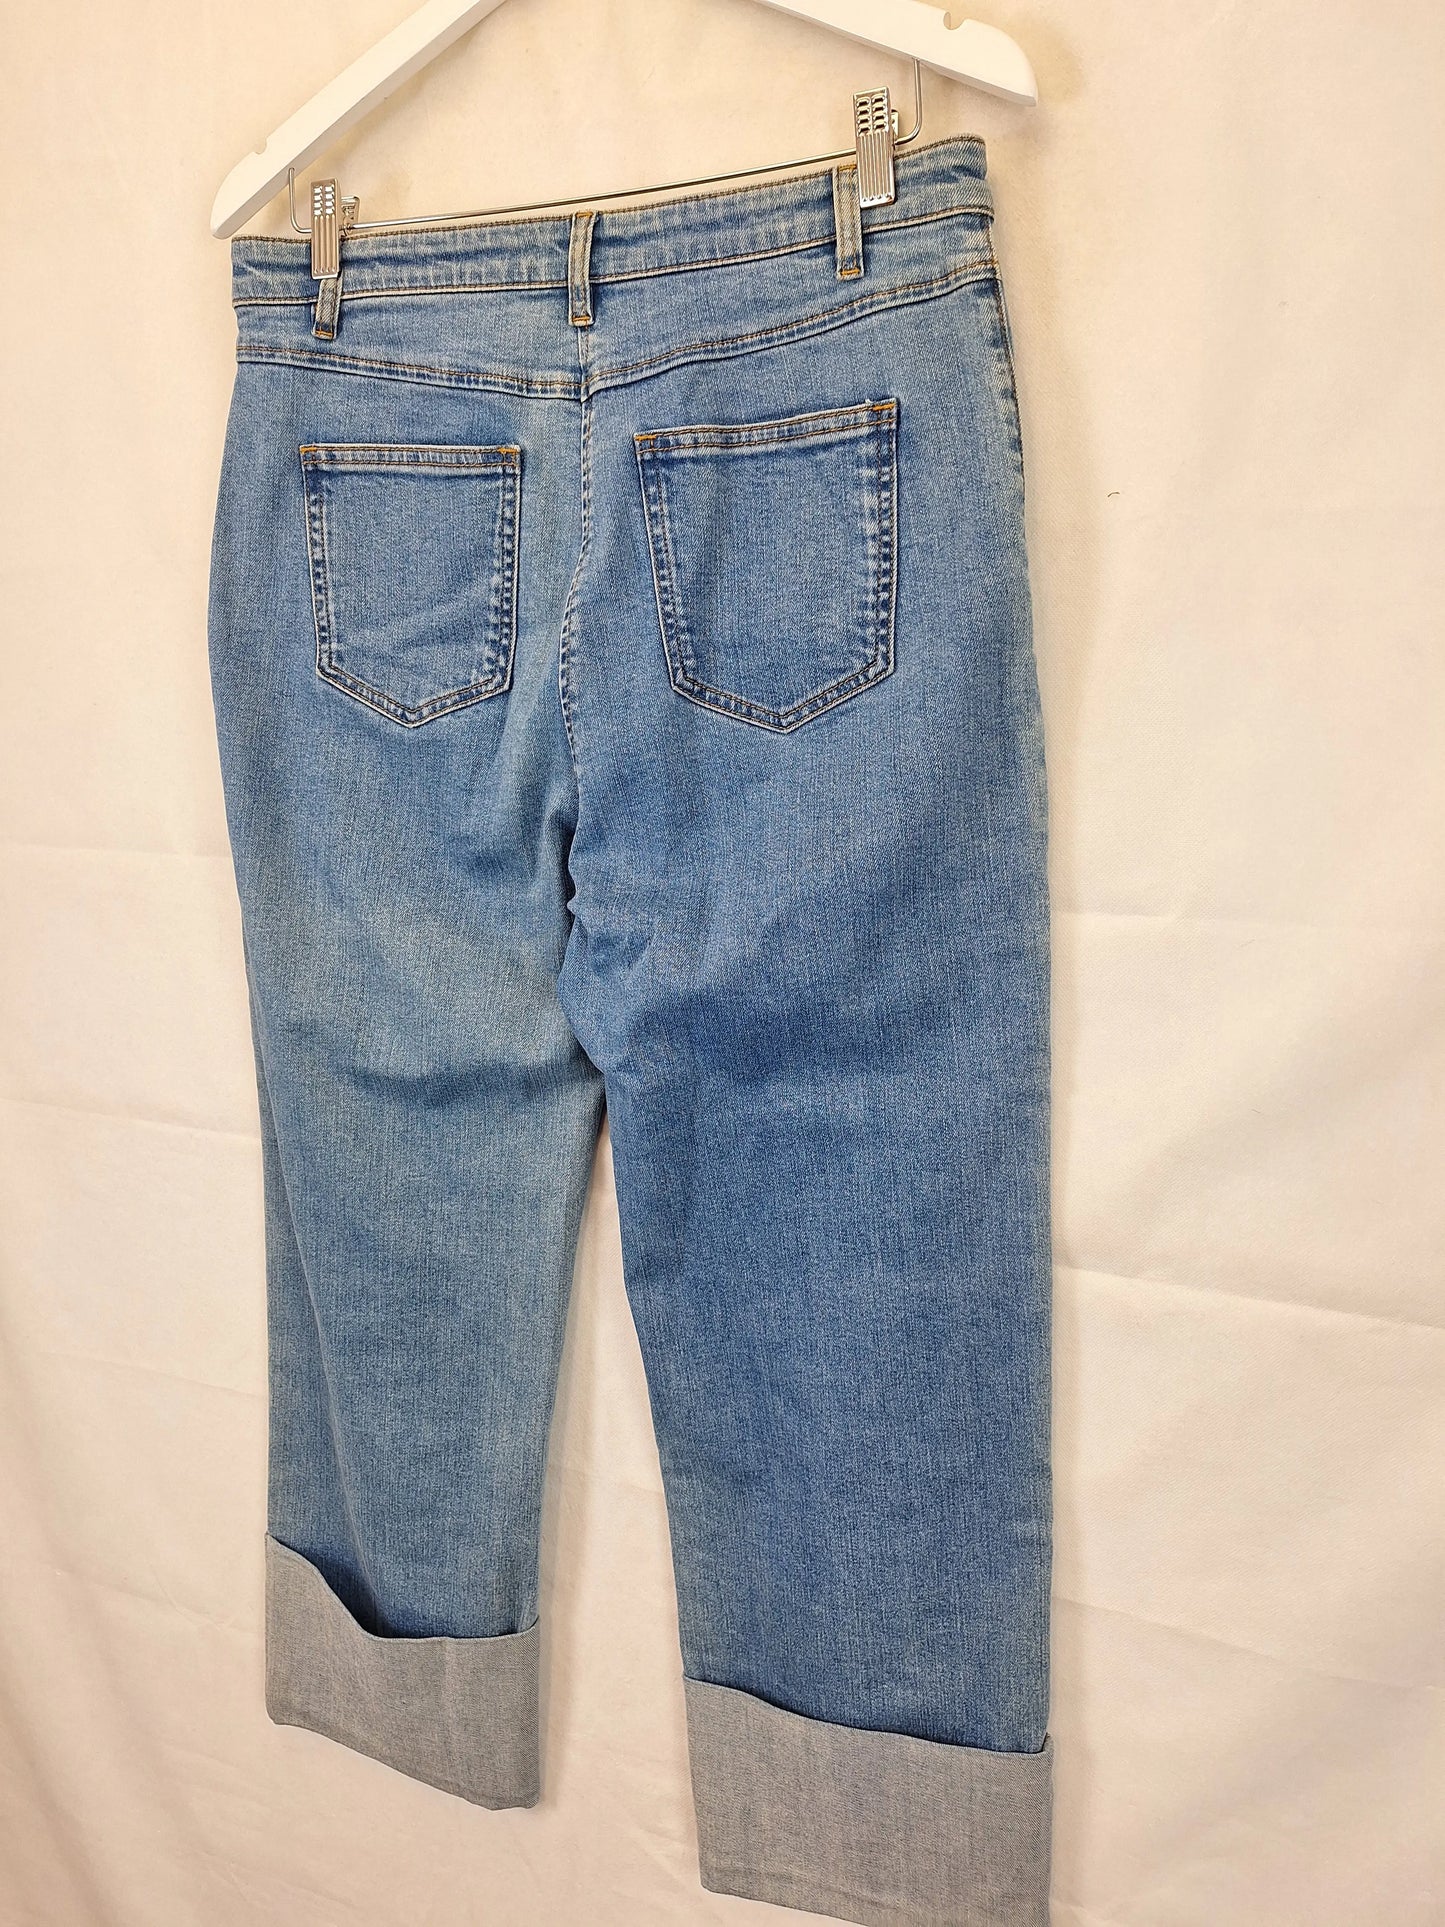 Zoe Kratzmann  Everyday Rolled Hem Jeans Size 12 by SwapUp-Online Second Hand Store-Online Thrift Store